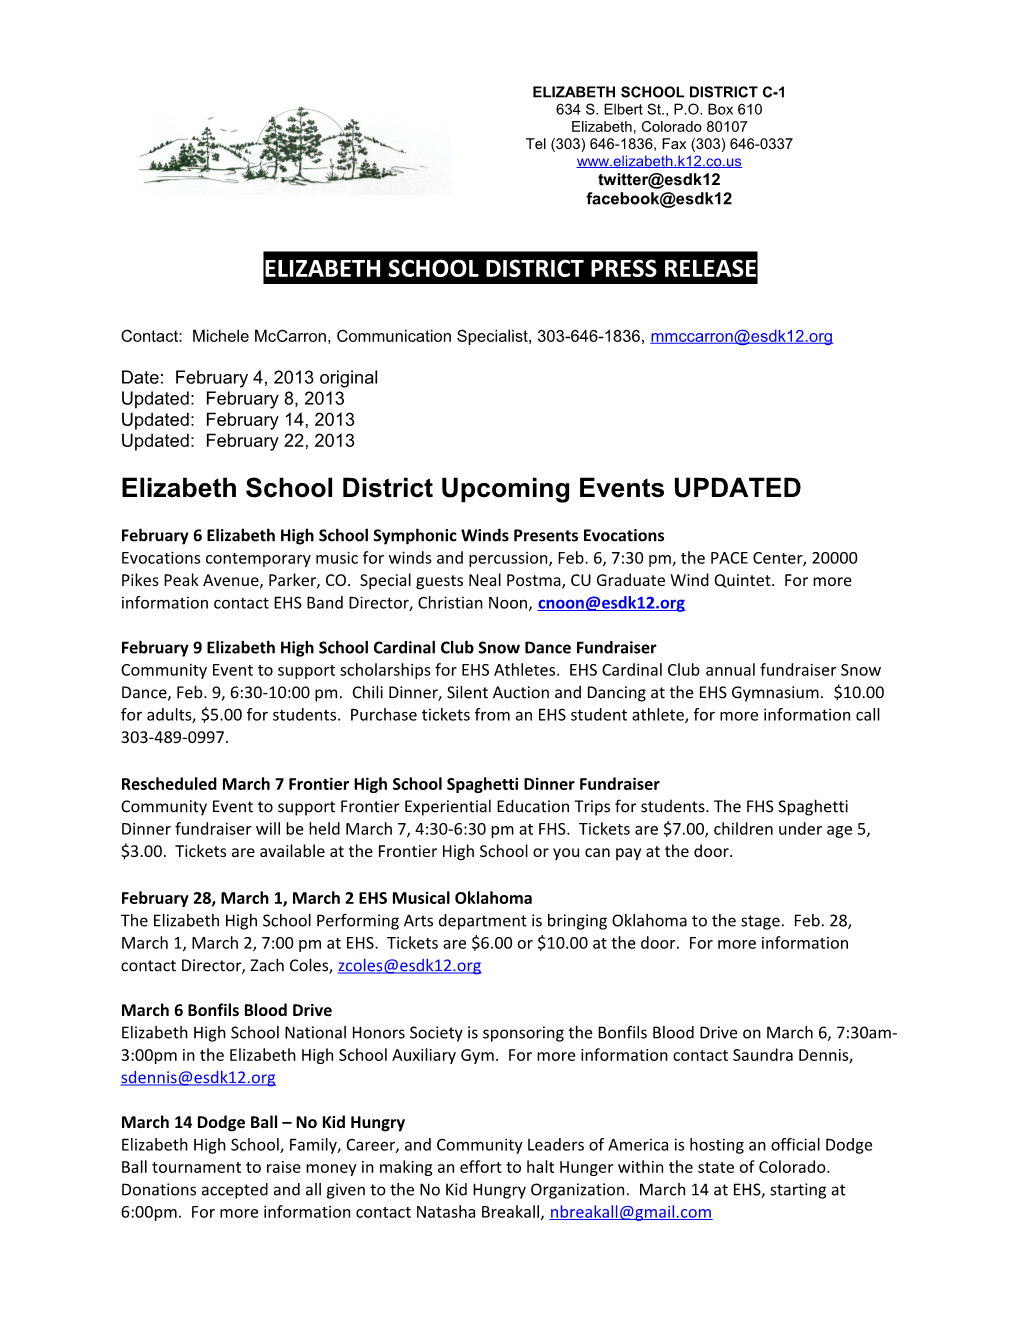 Elizabeth School District Press Release